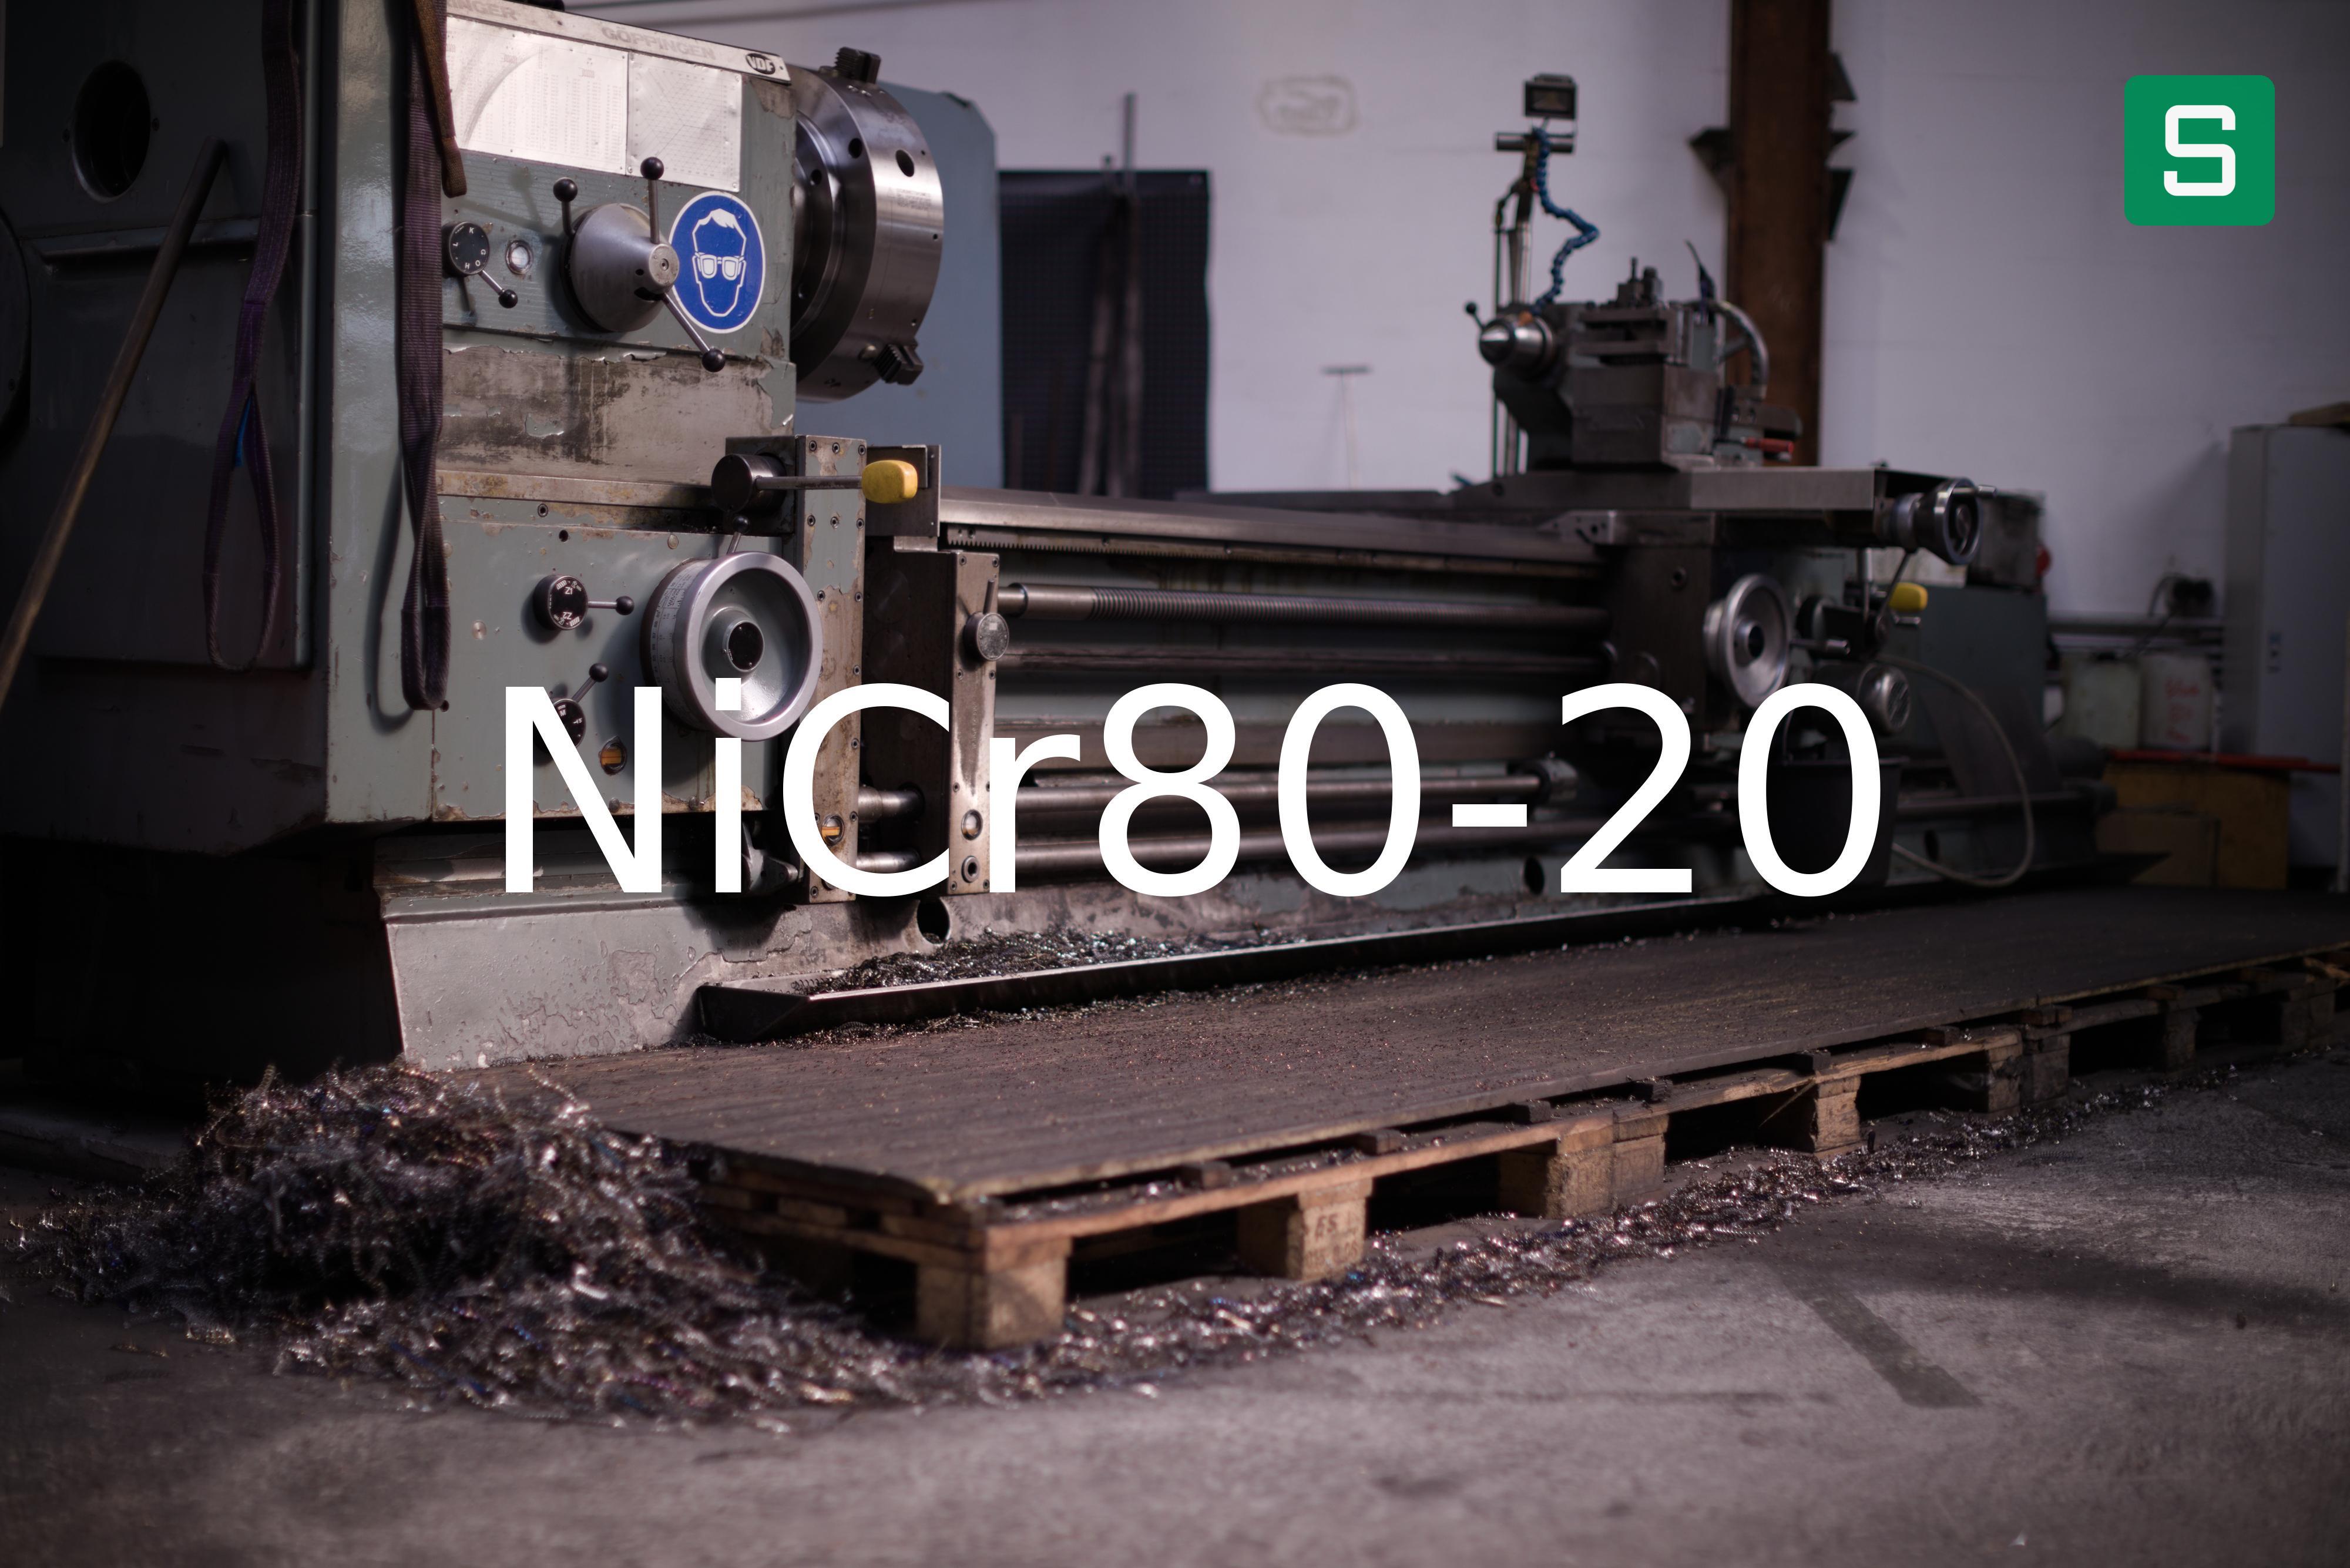 Material de Acero: NiCr80-20